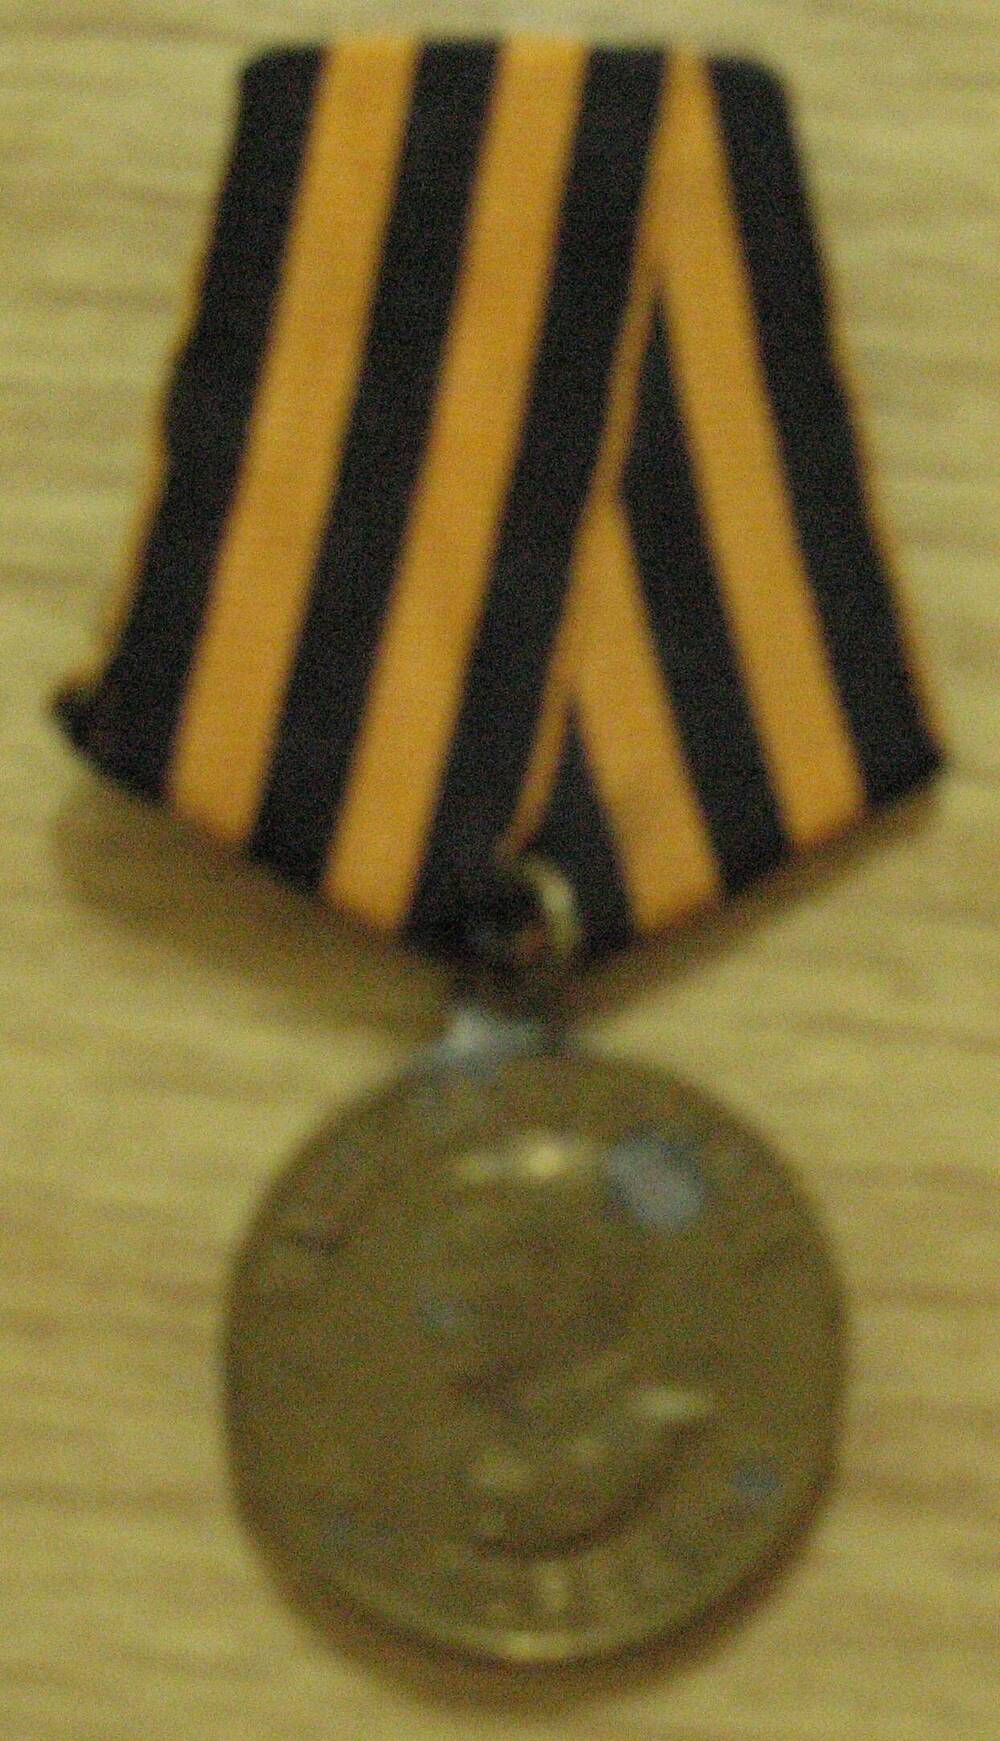 Медаль за Победу над Германией.